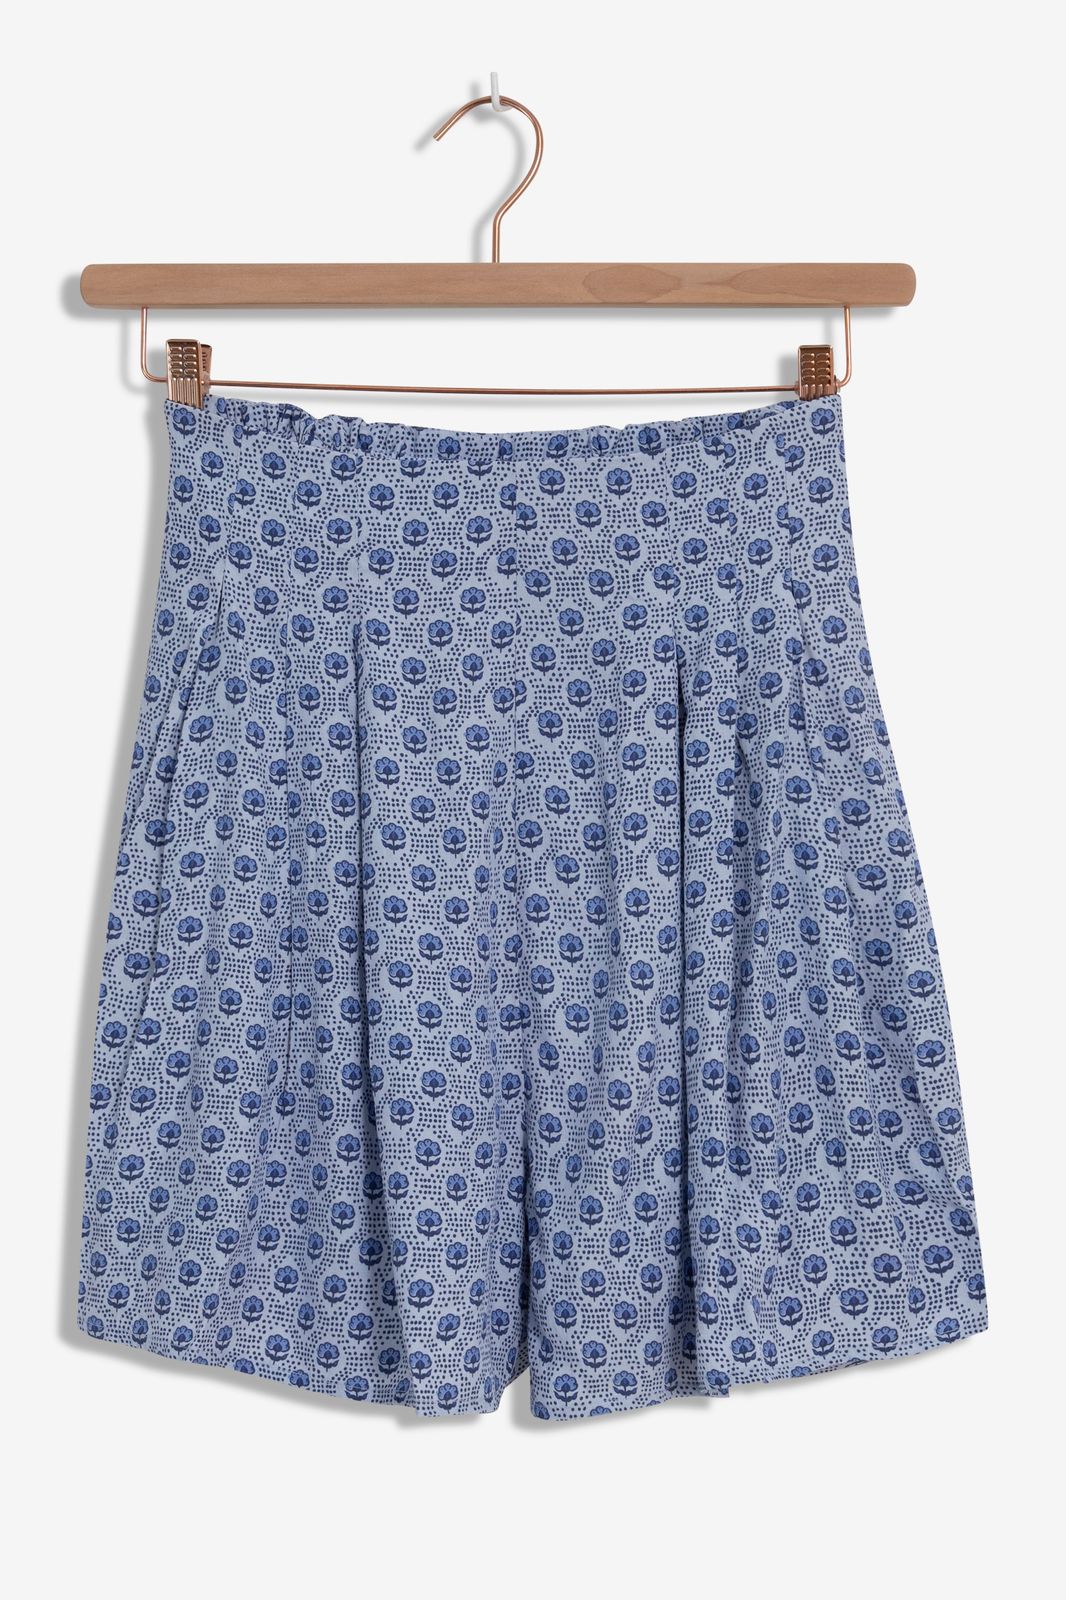 Blauwe wijde shorts met minimal flower print